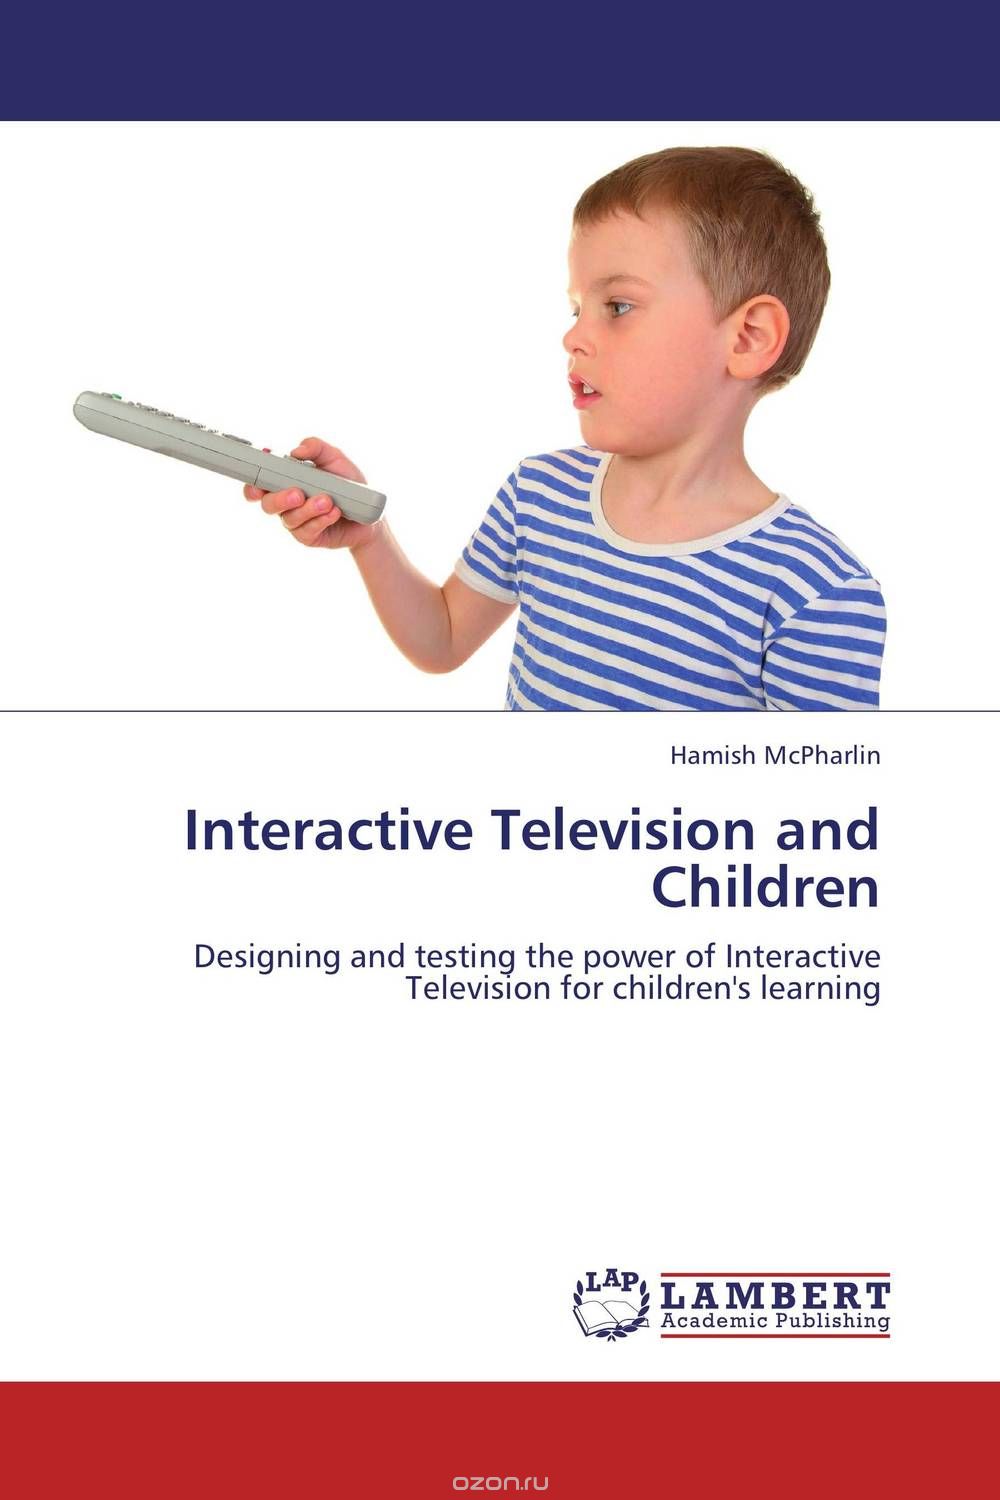 Скачать книгу "Interactive Television and Children"